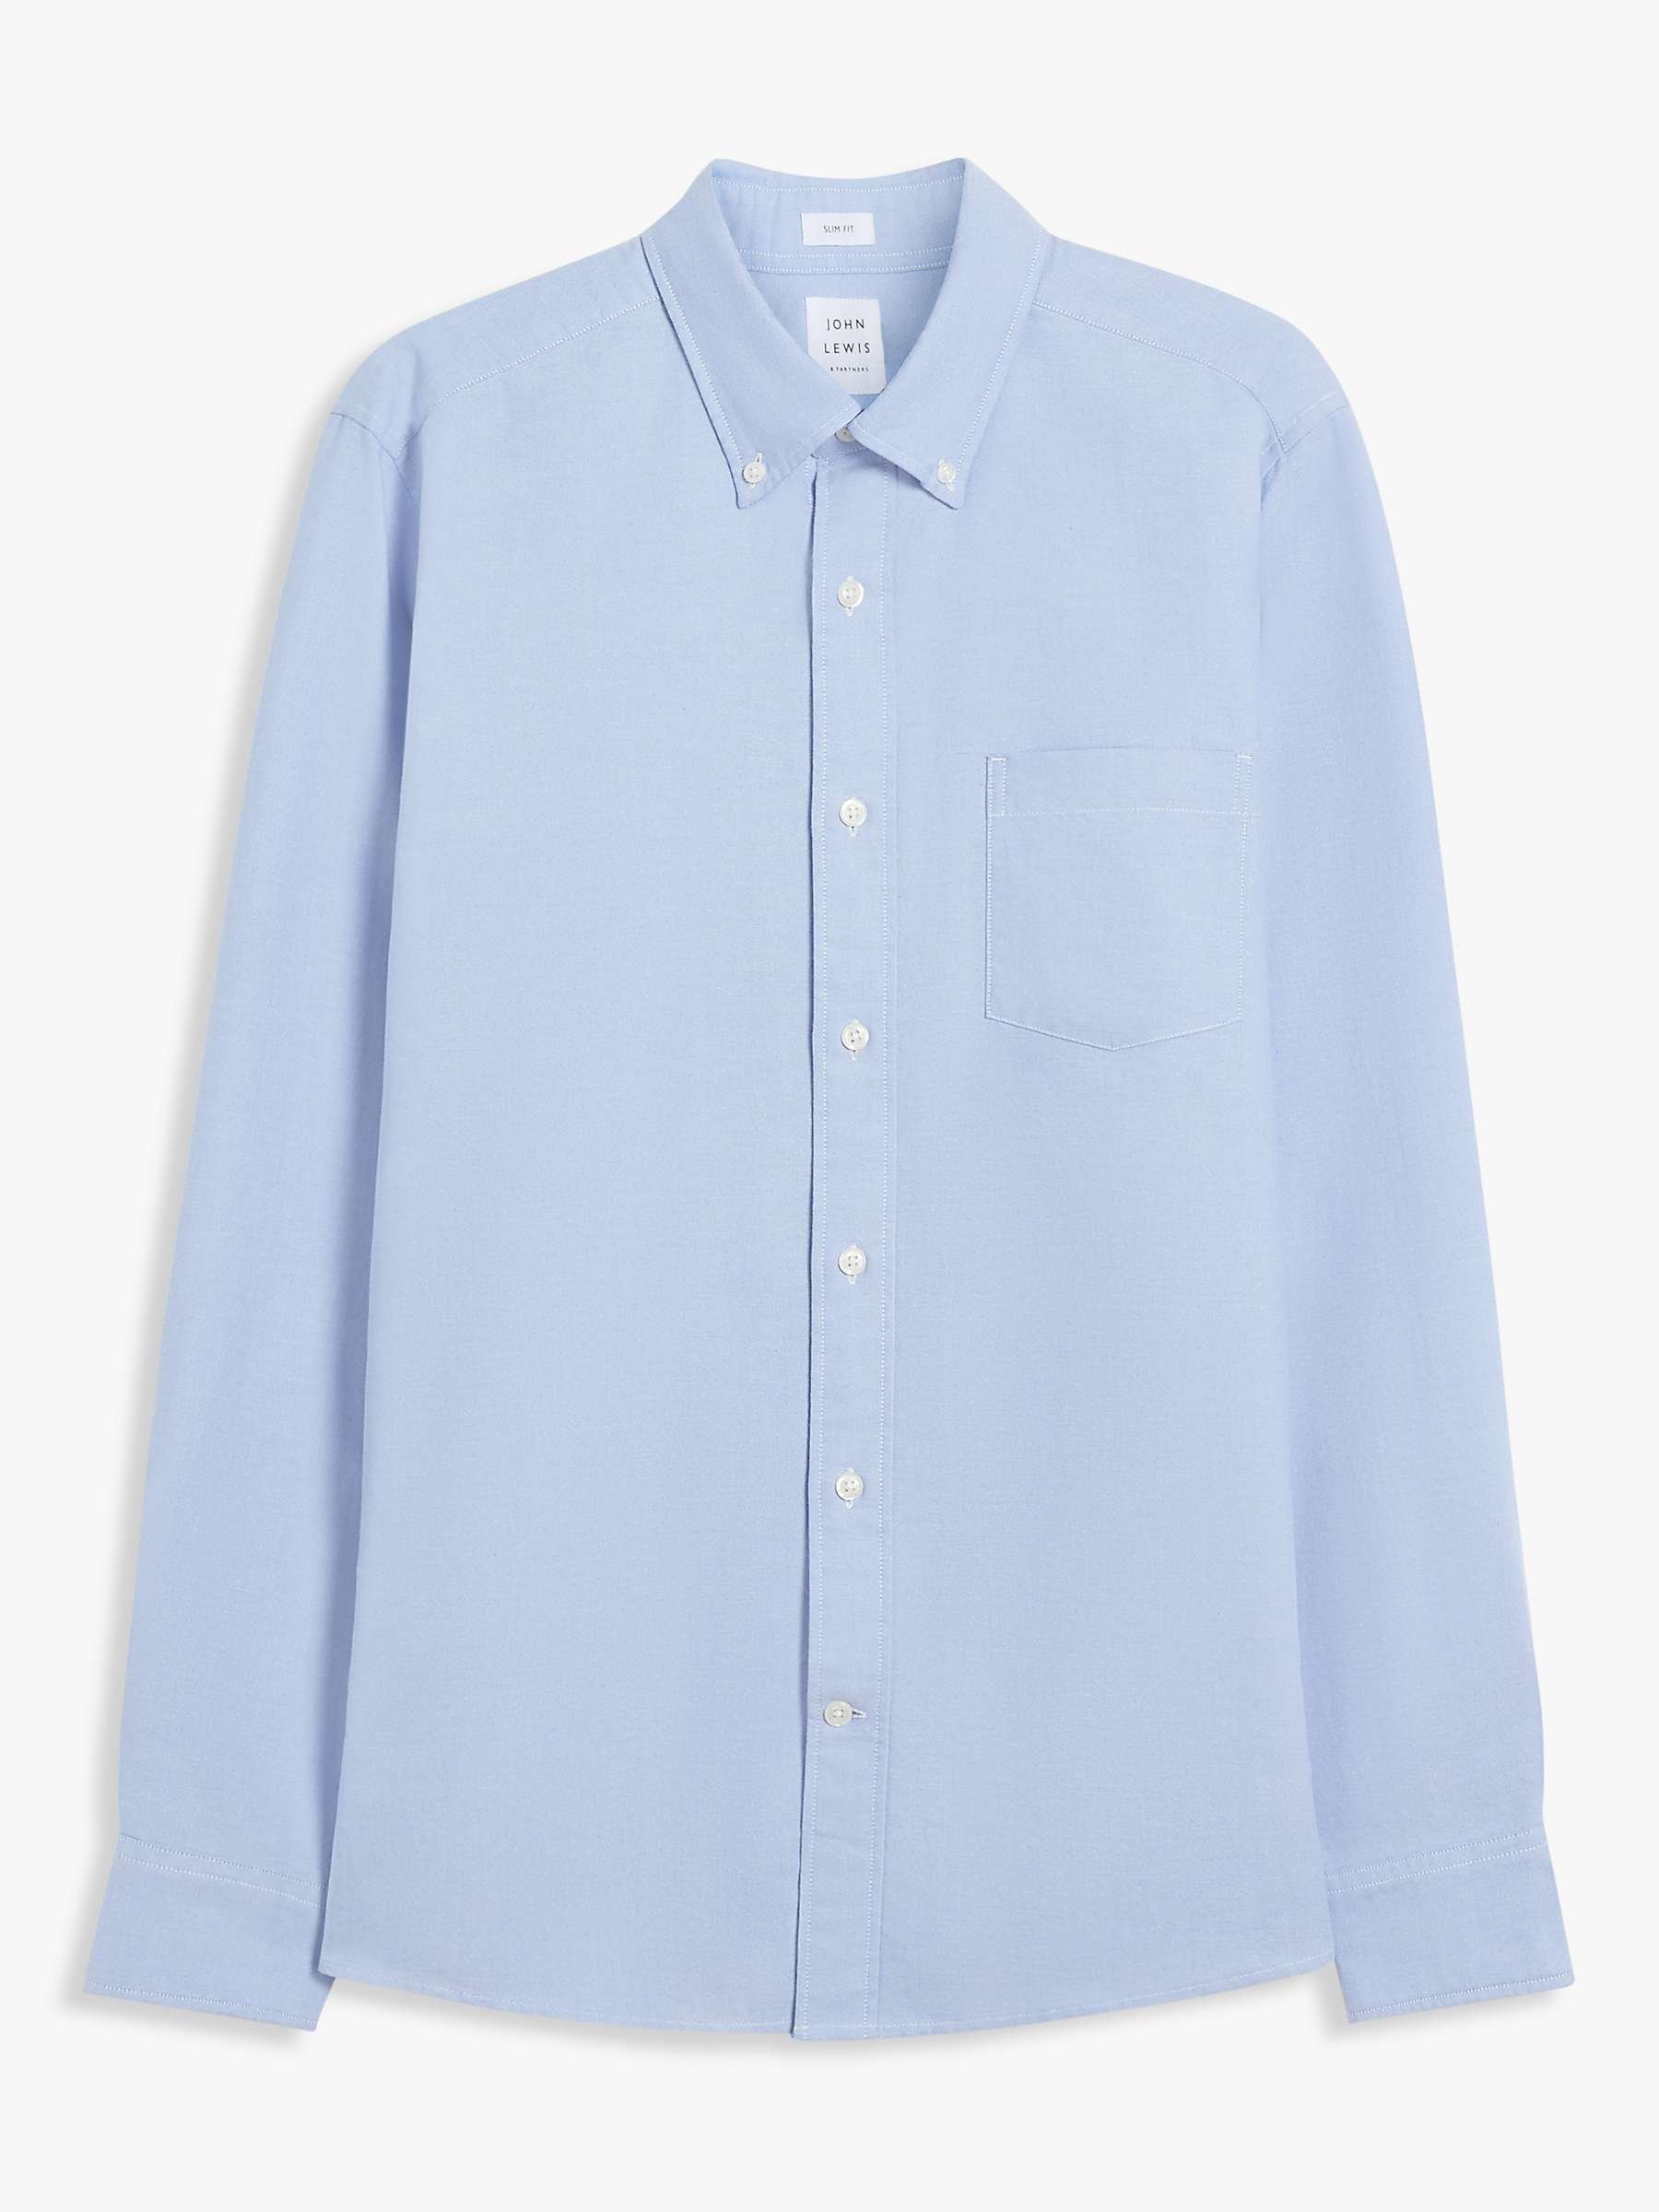 The Oxford Button-Down Shirt